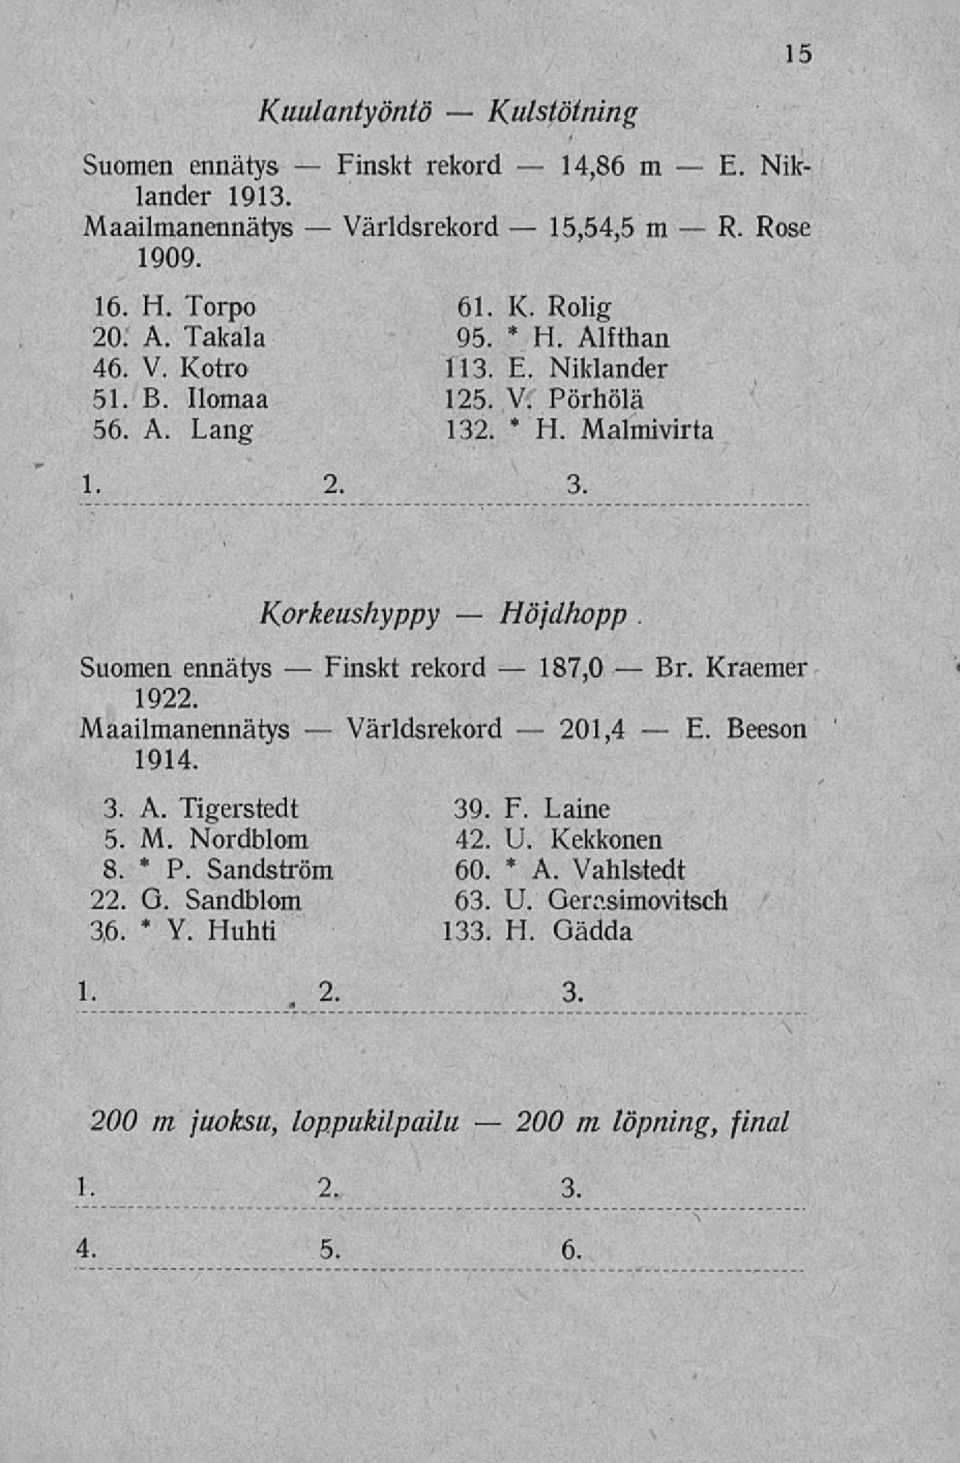 H. Malmivirta 1. 2. 3. Rose Suomen ennätys 1922. Maailmanennätys 1914. Korkeushyppy rekord. Kraemer 3. A. Tigerstedt 39. F. Laine 5. M. Nordblom 42. U. Kekkonen 8.